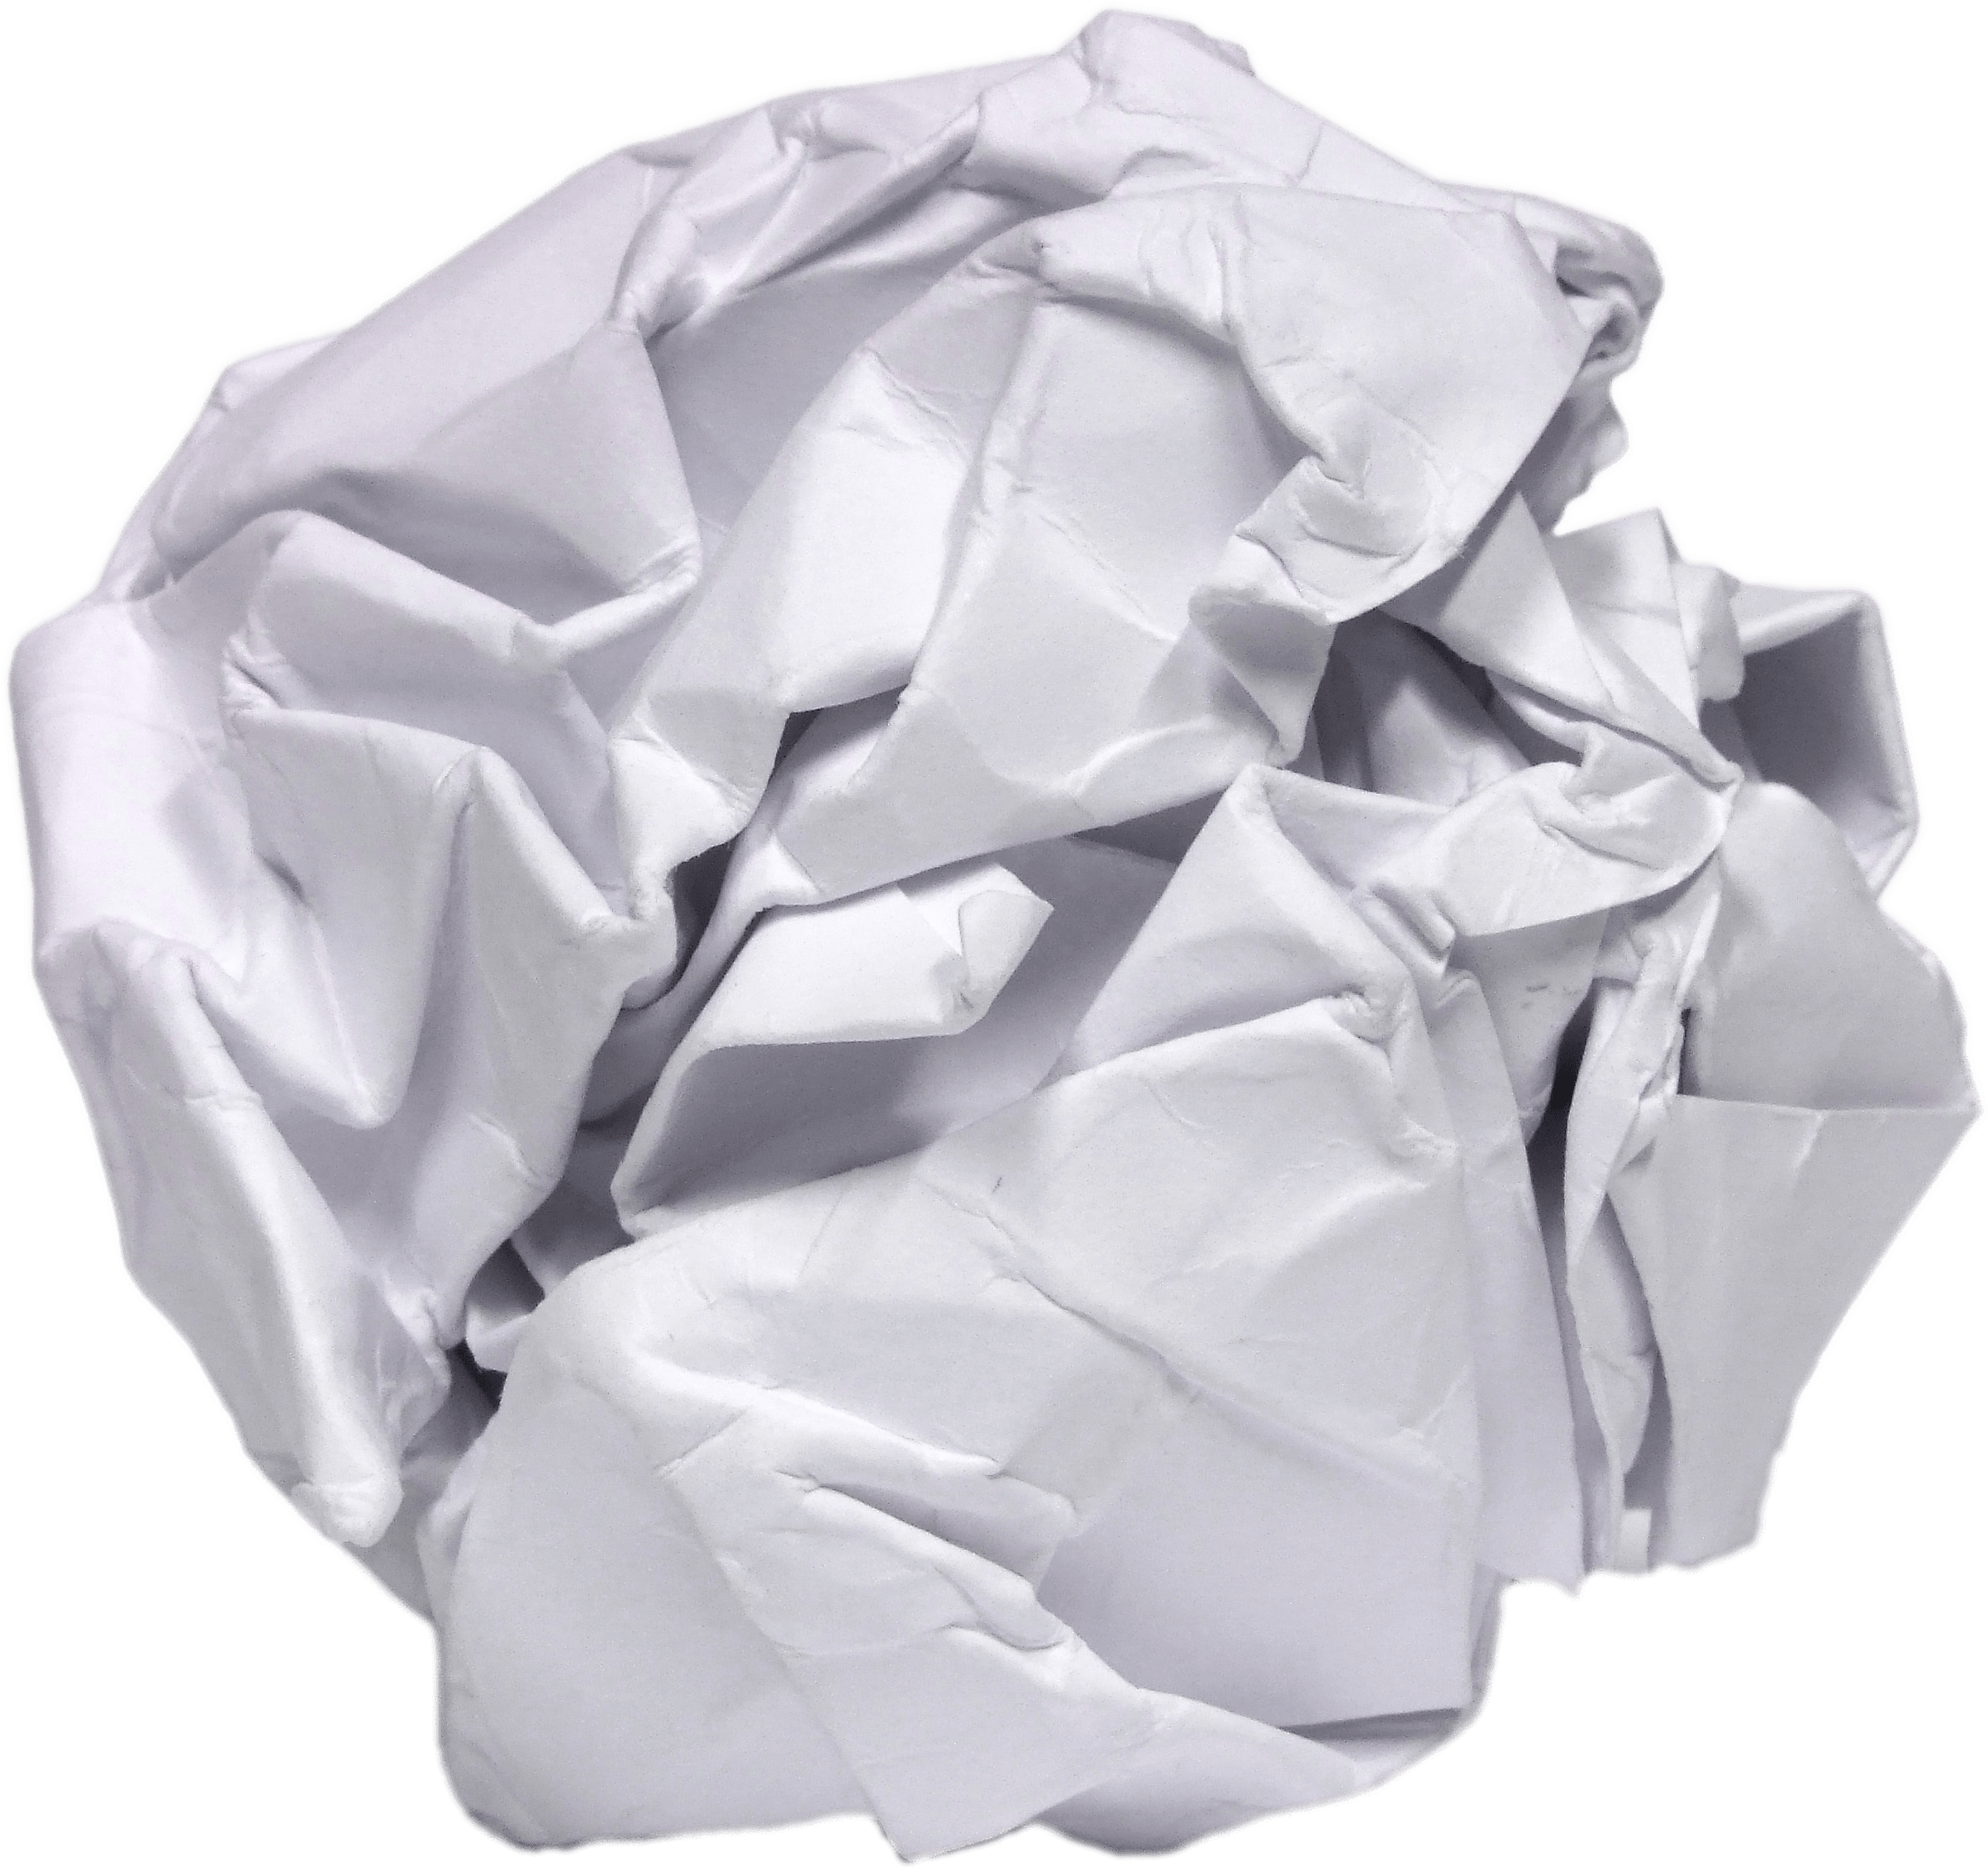 A Crumpled White Paper Ball